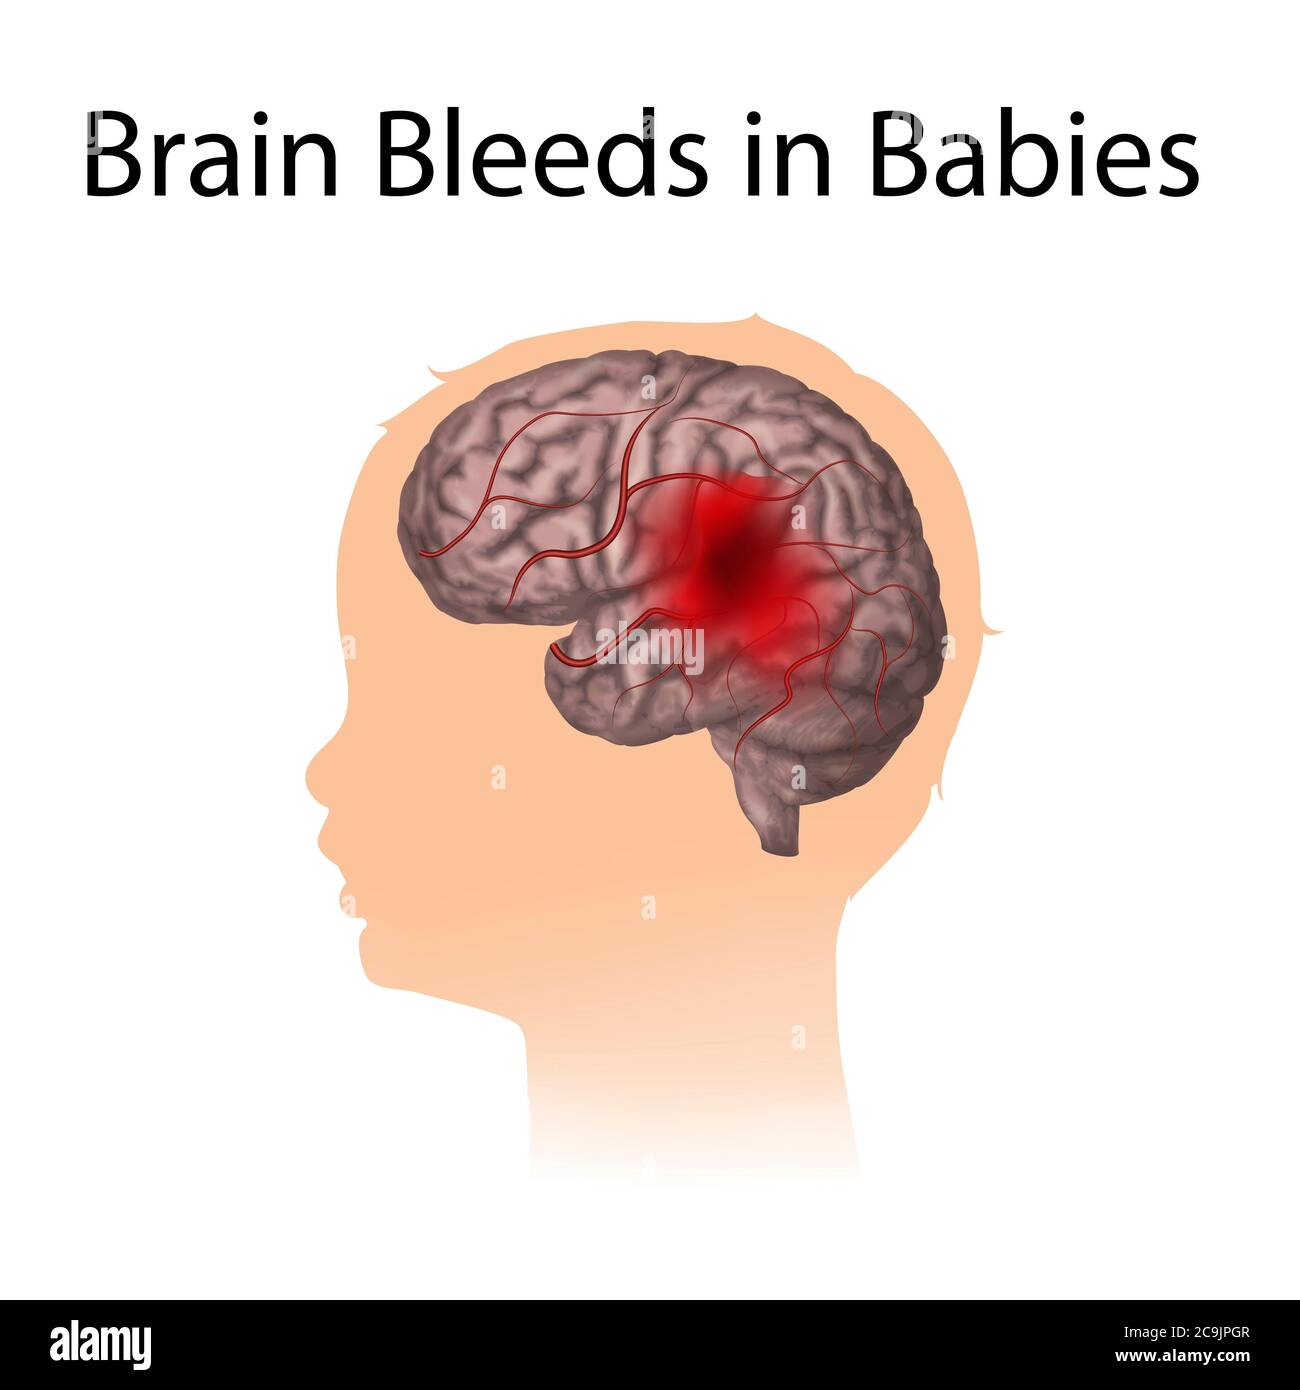 Brain bleeds in babies, illustration. Stock Photo